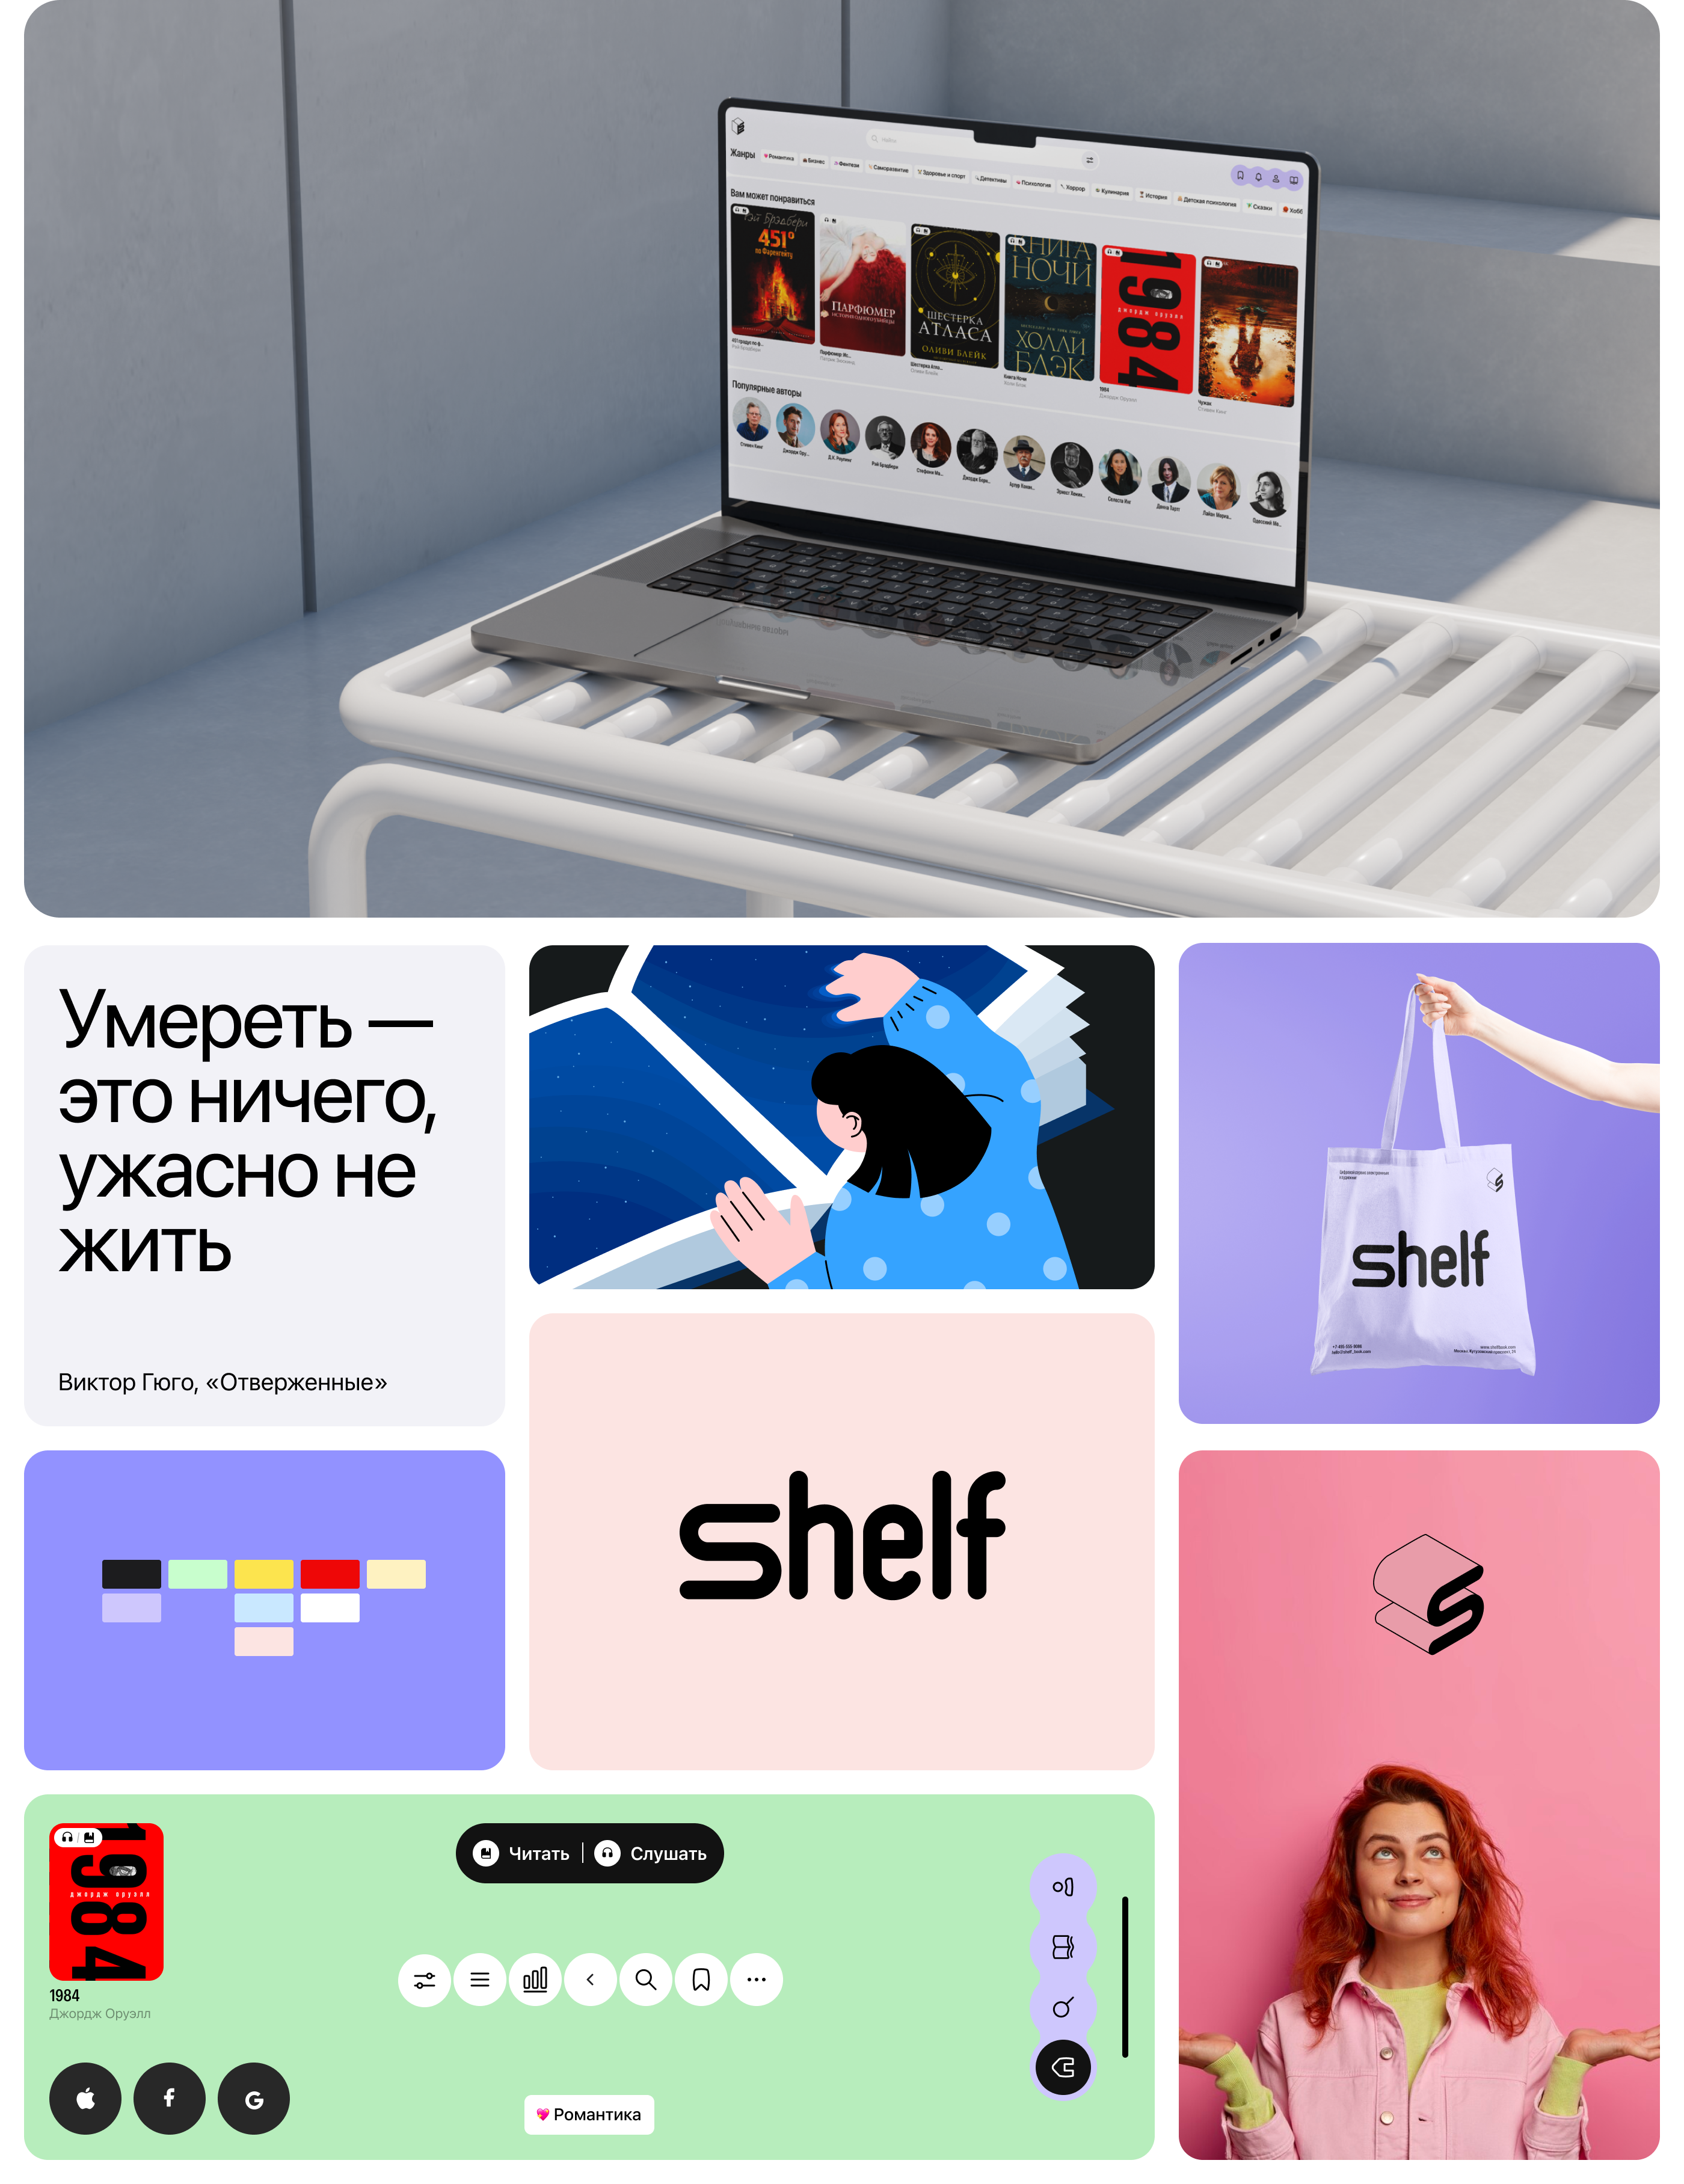 Shelf — Изображение №5 — Интерфейсы, Брендинг на Dprofile